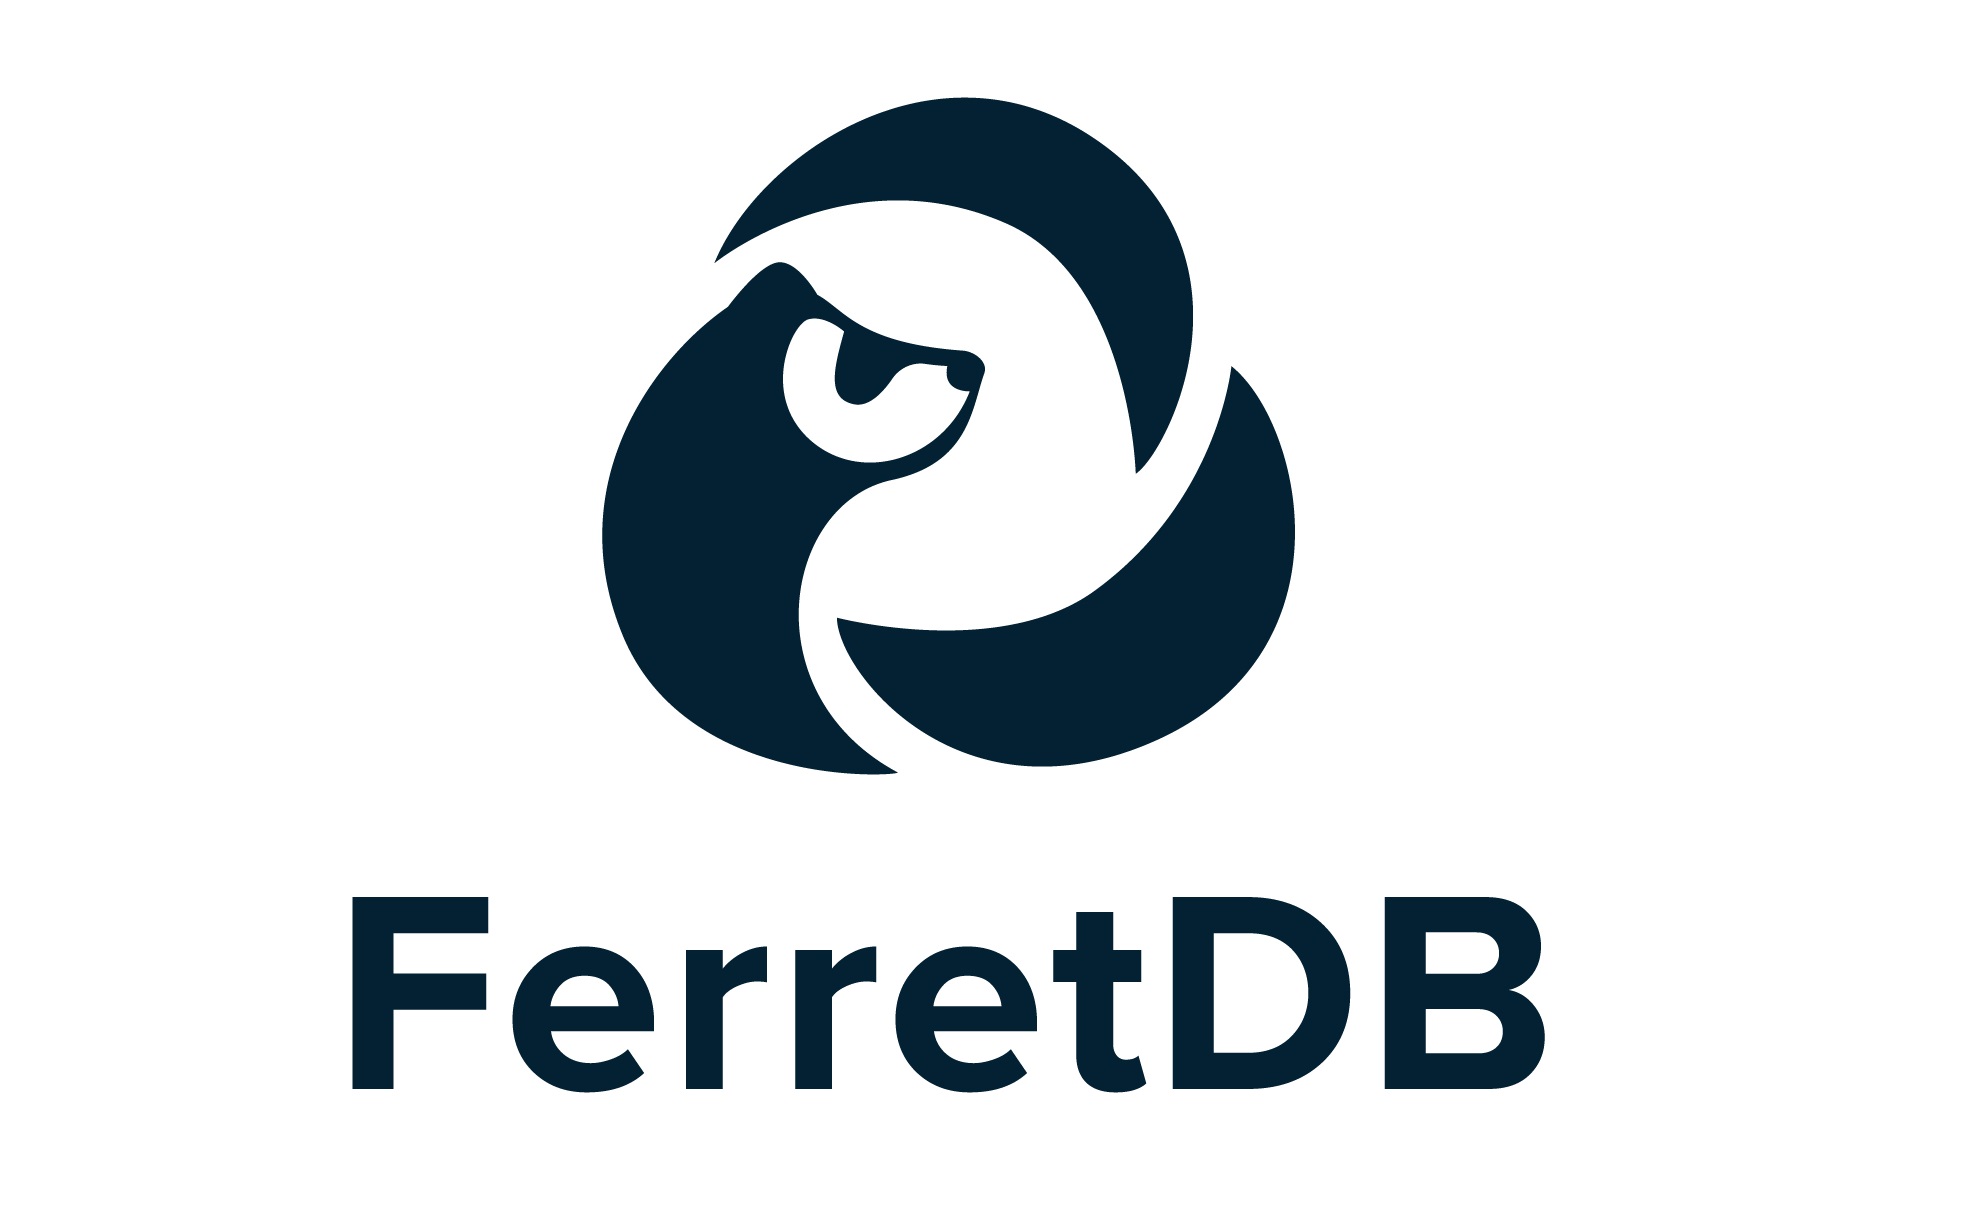 MangoDB has a new name-FerretDB